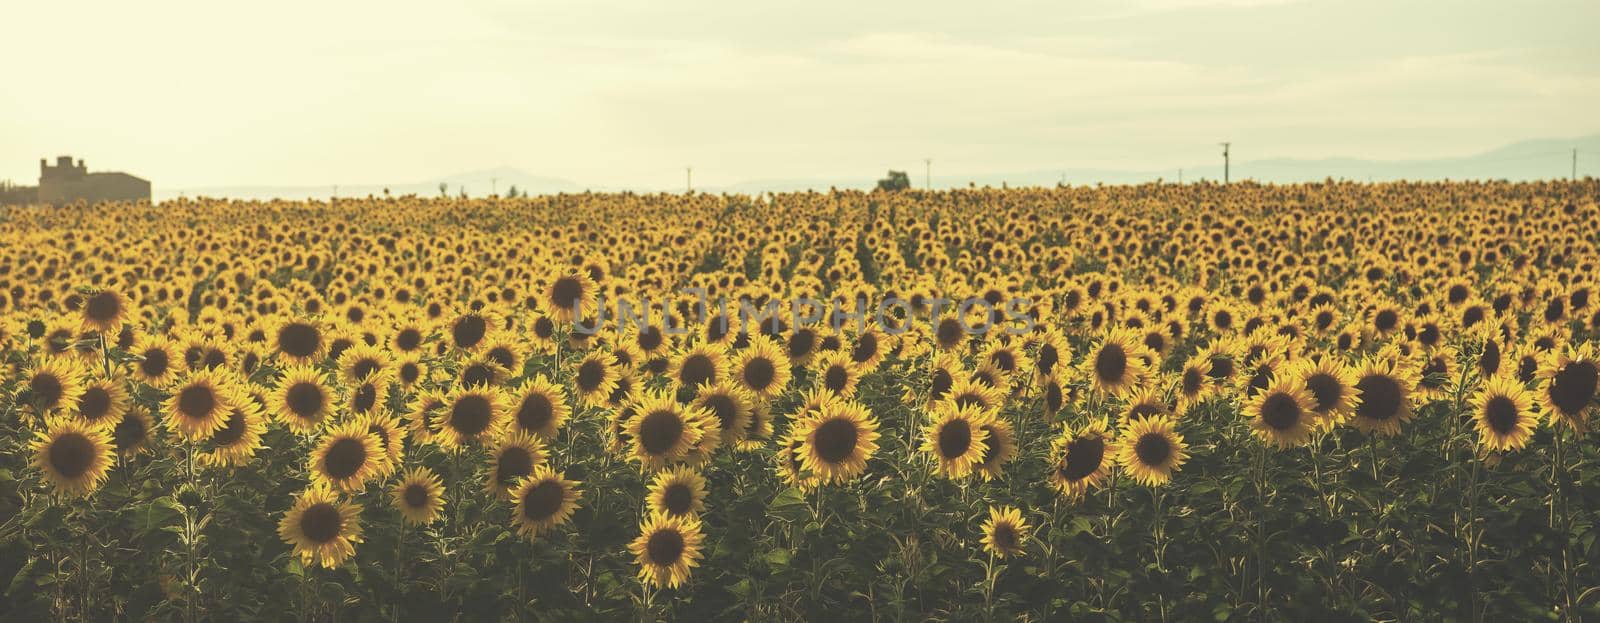 sunflower field by dotshock